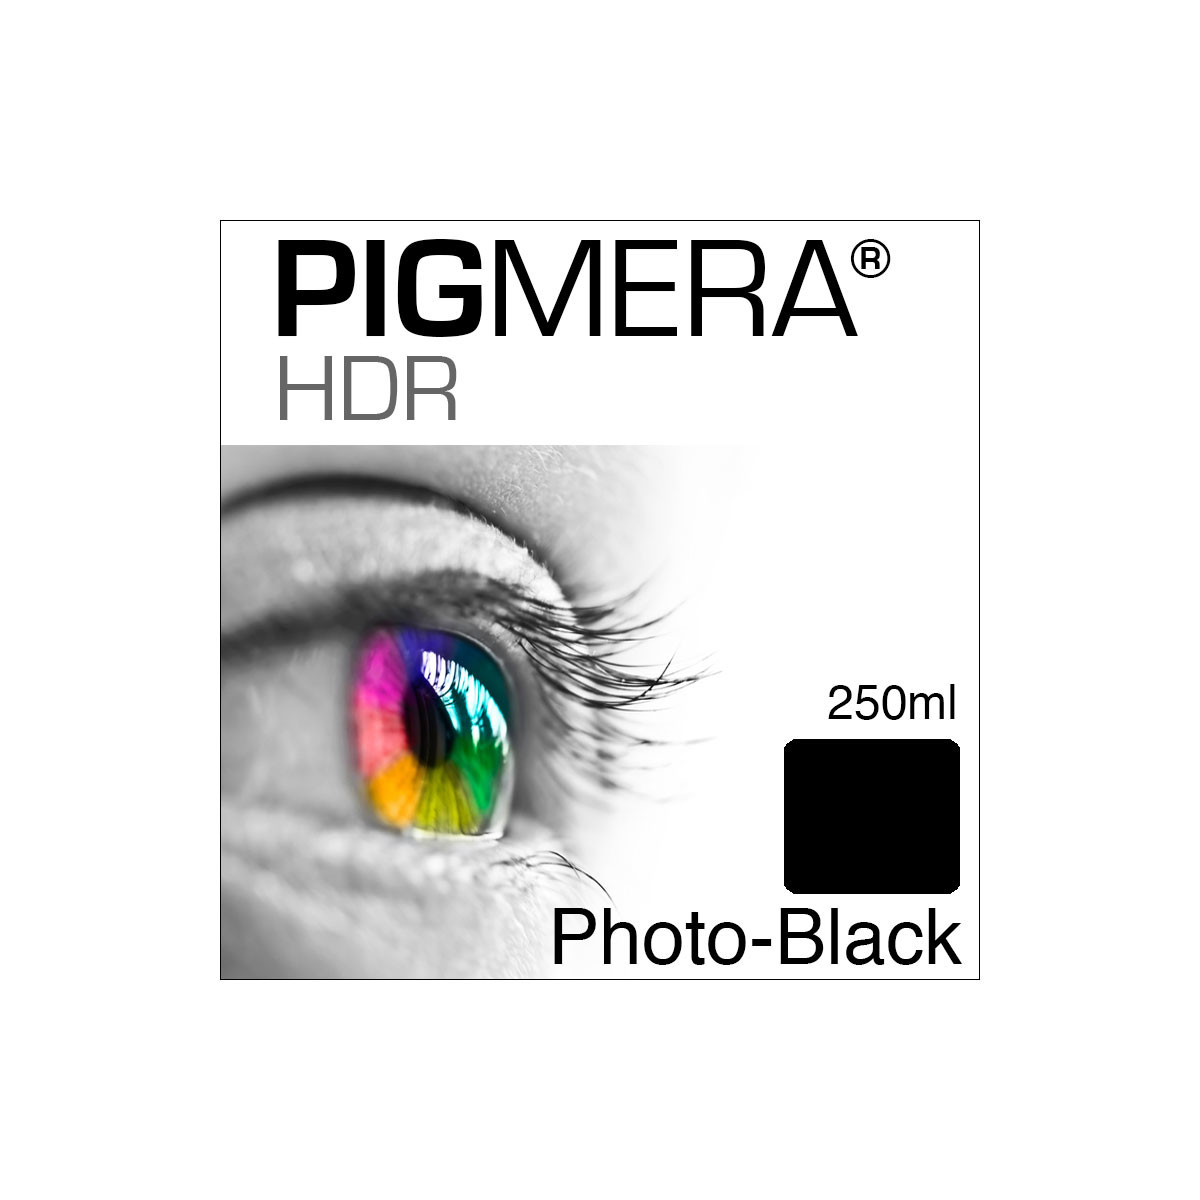 farbenwerk Pigmera HDR Bottle Photo-Black 250ml